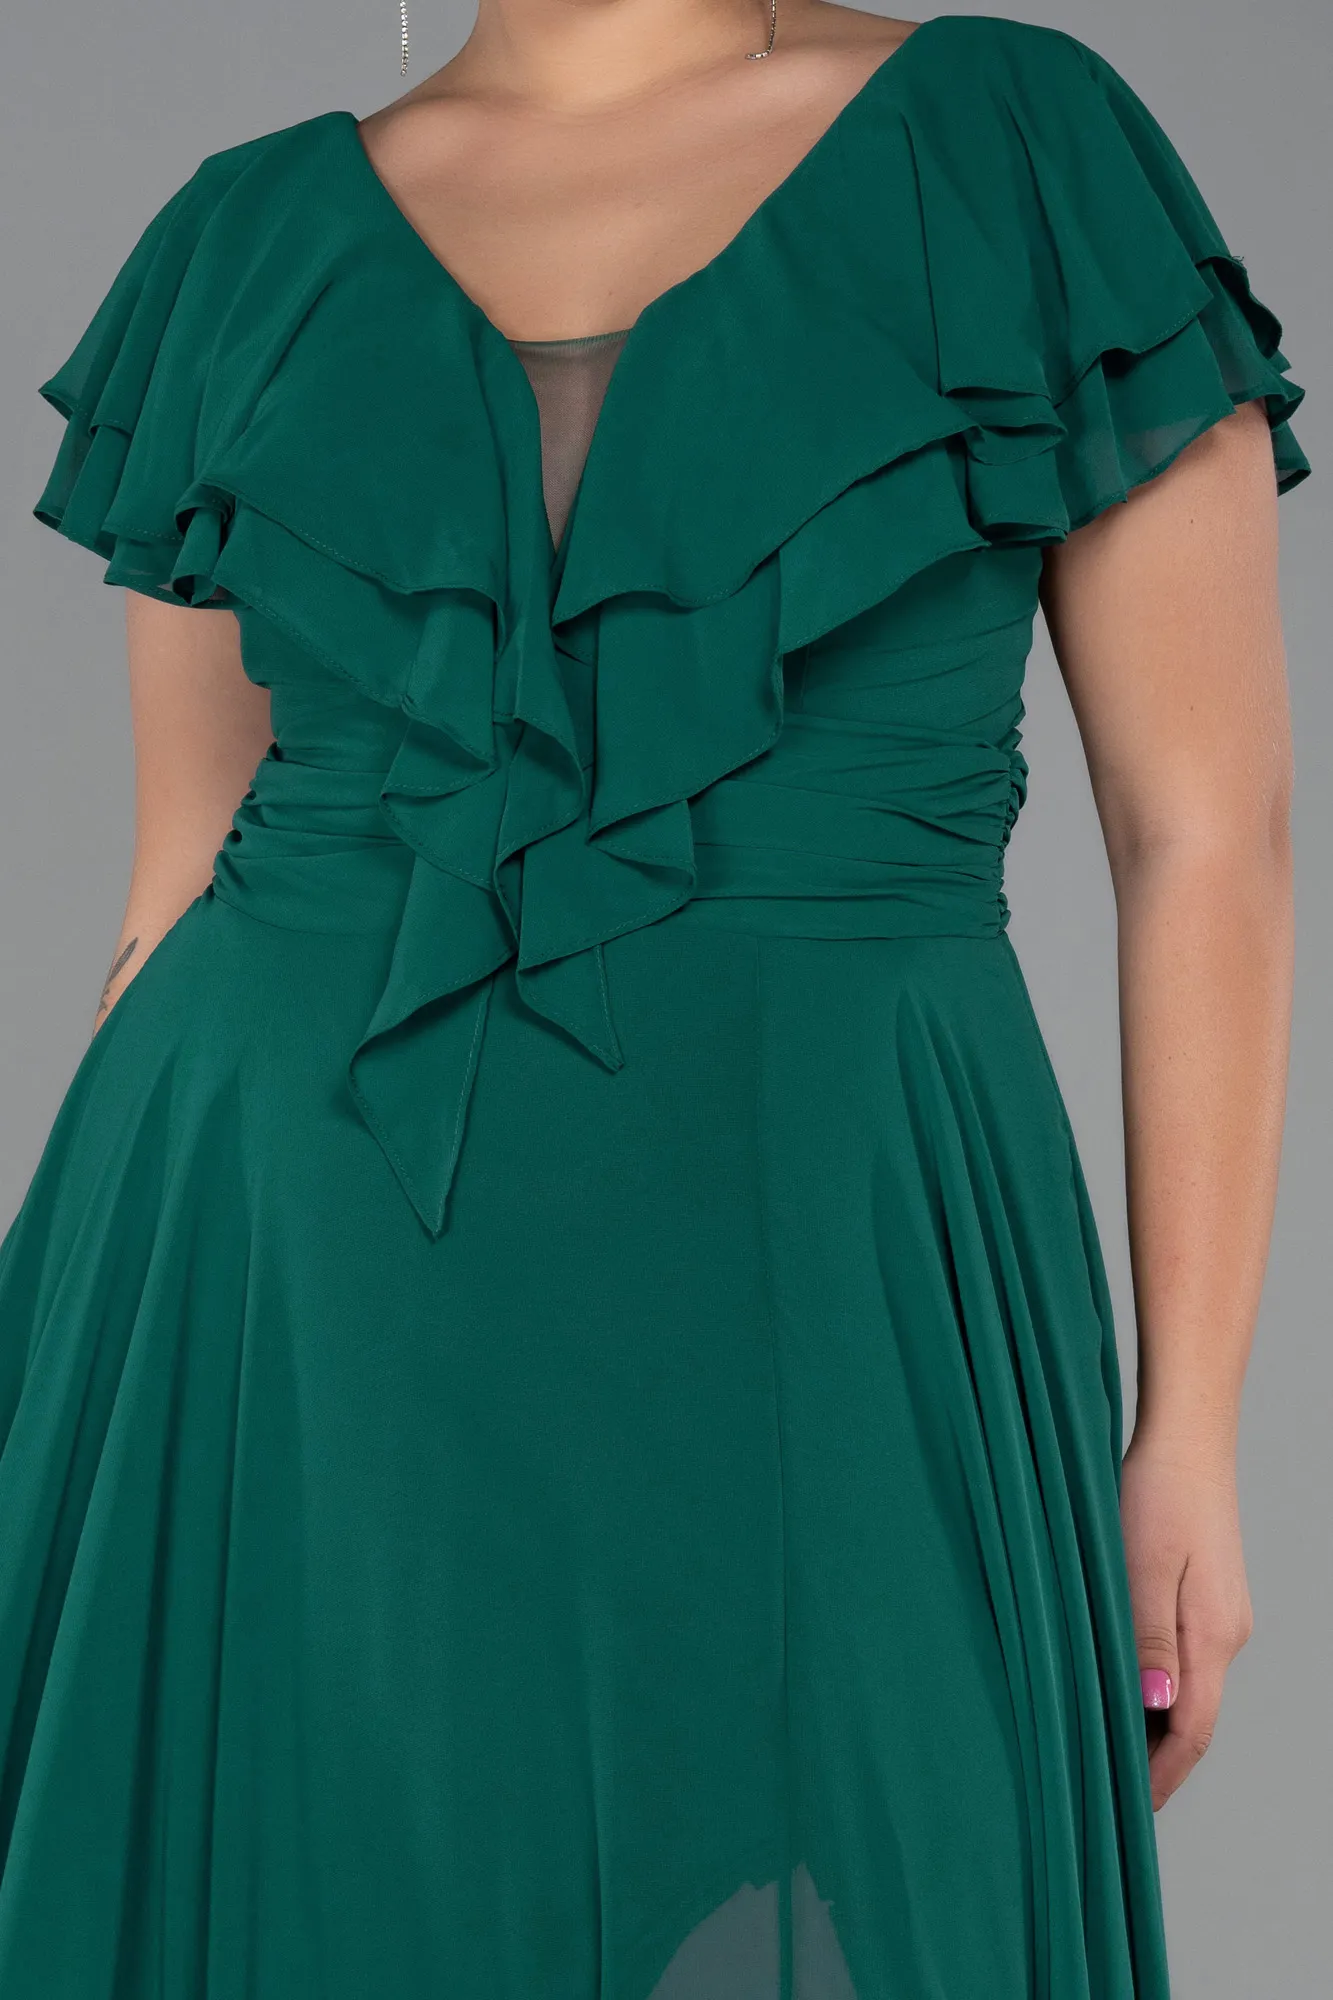 Emerald Green-Long Plus Size Evening Dress ABU032